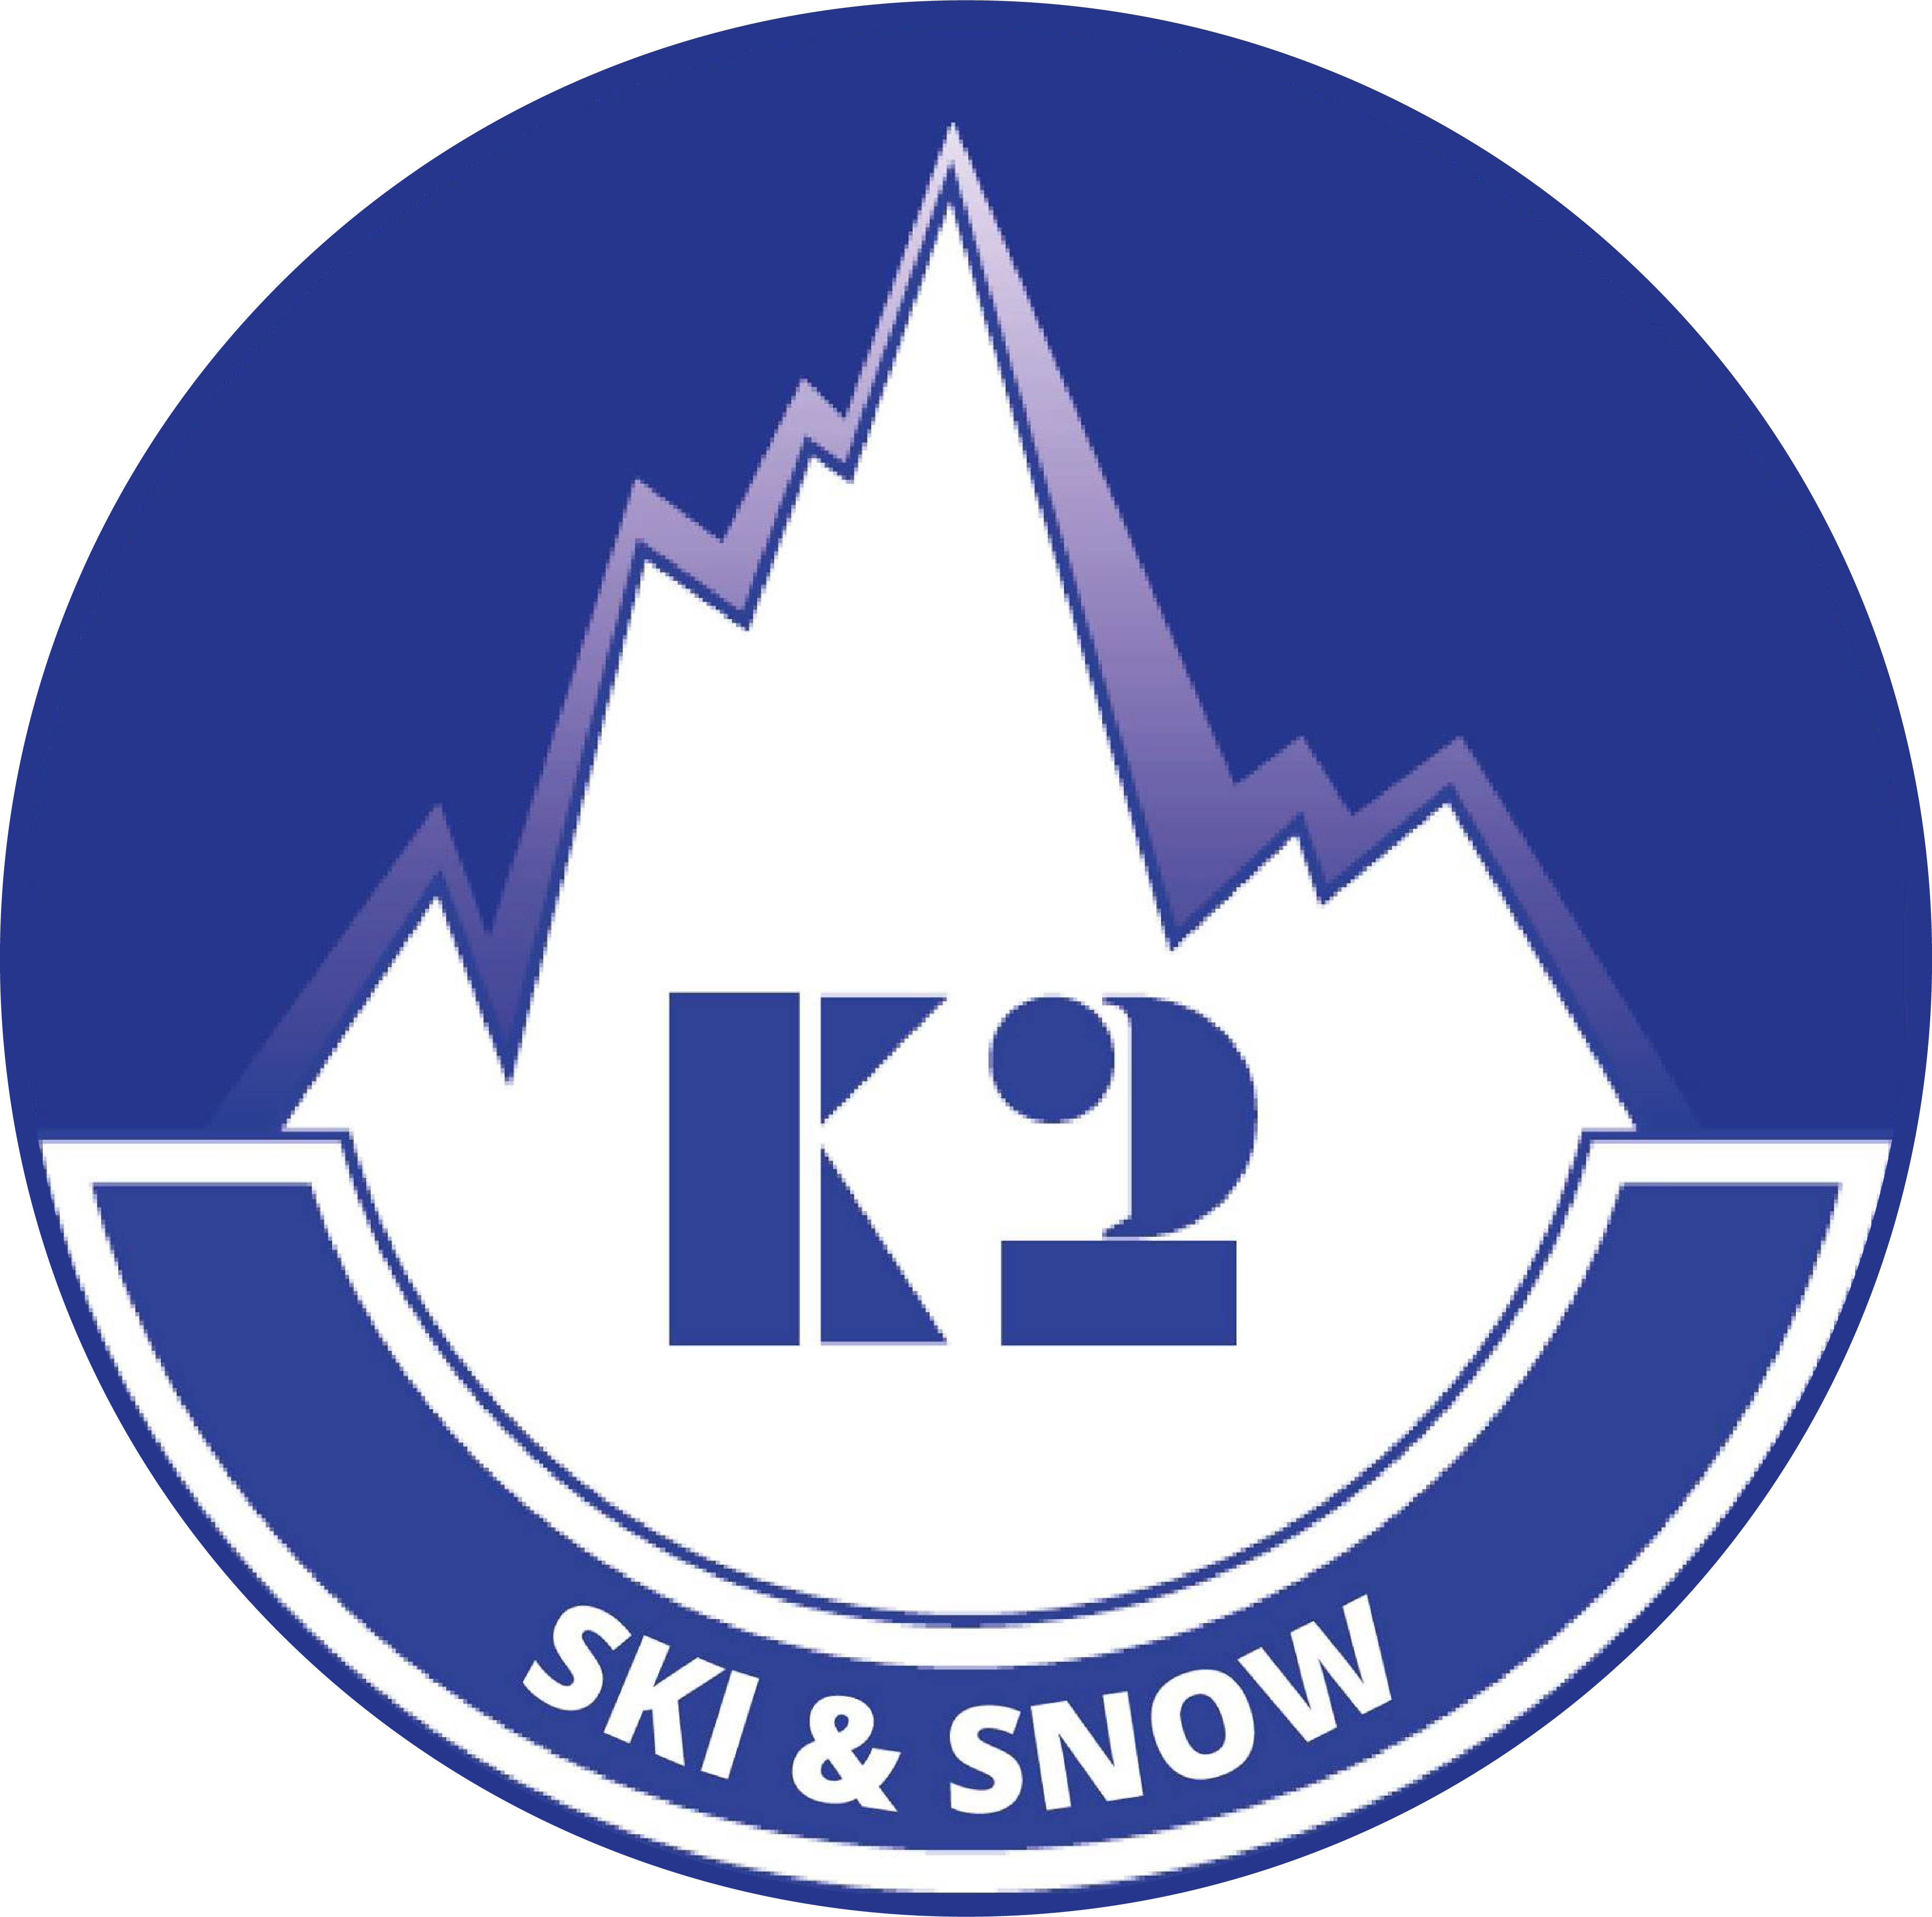 K2 Sport & skate